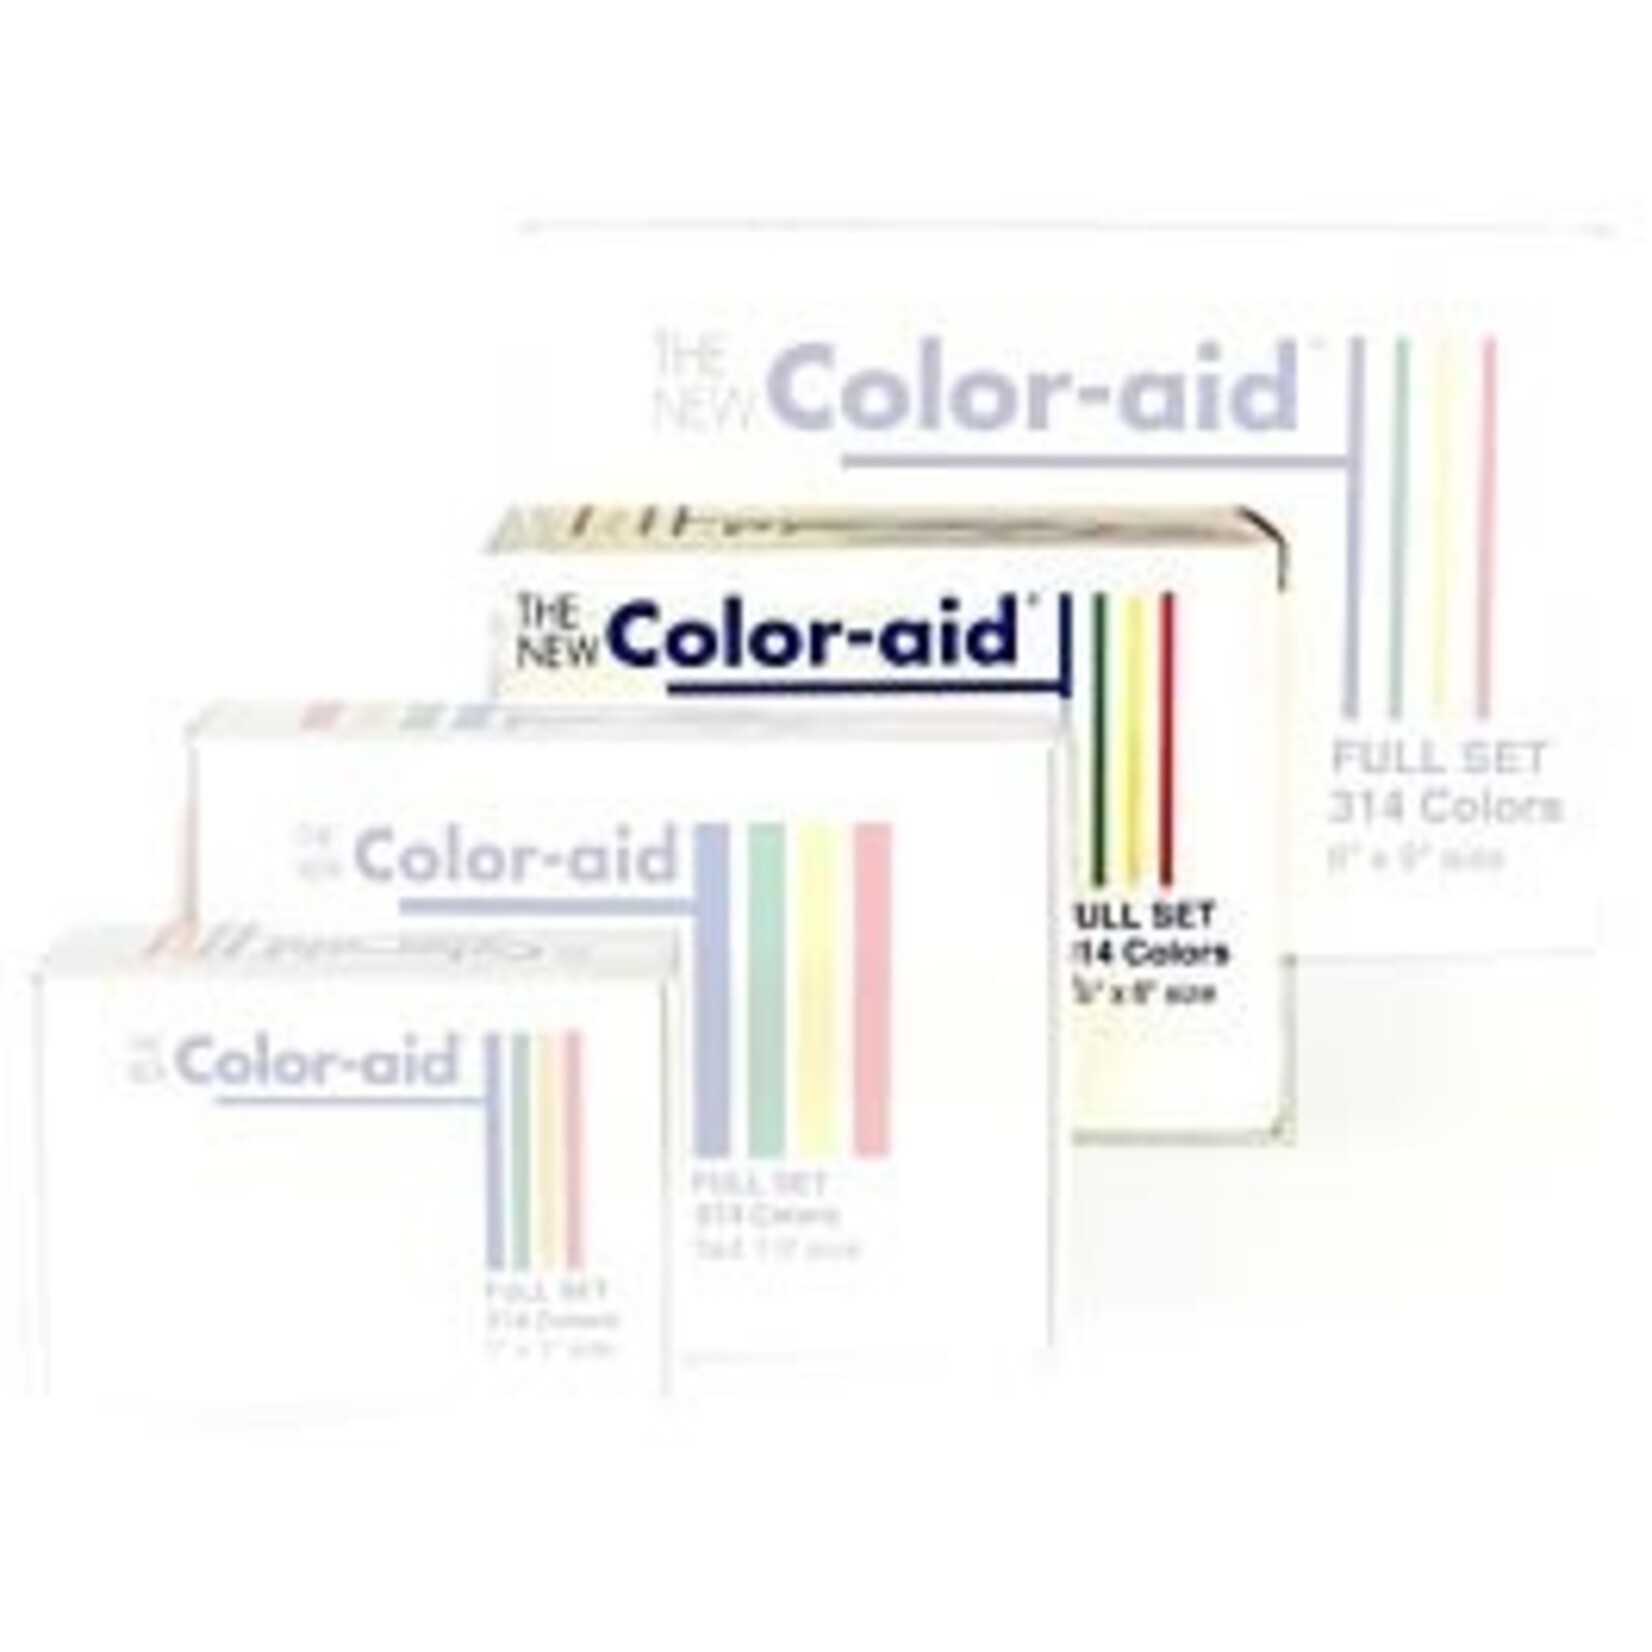 Color-Aid Color-Aid Full Set 4.5"X 6"